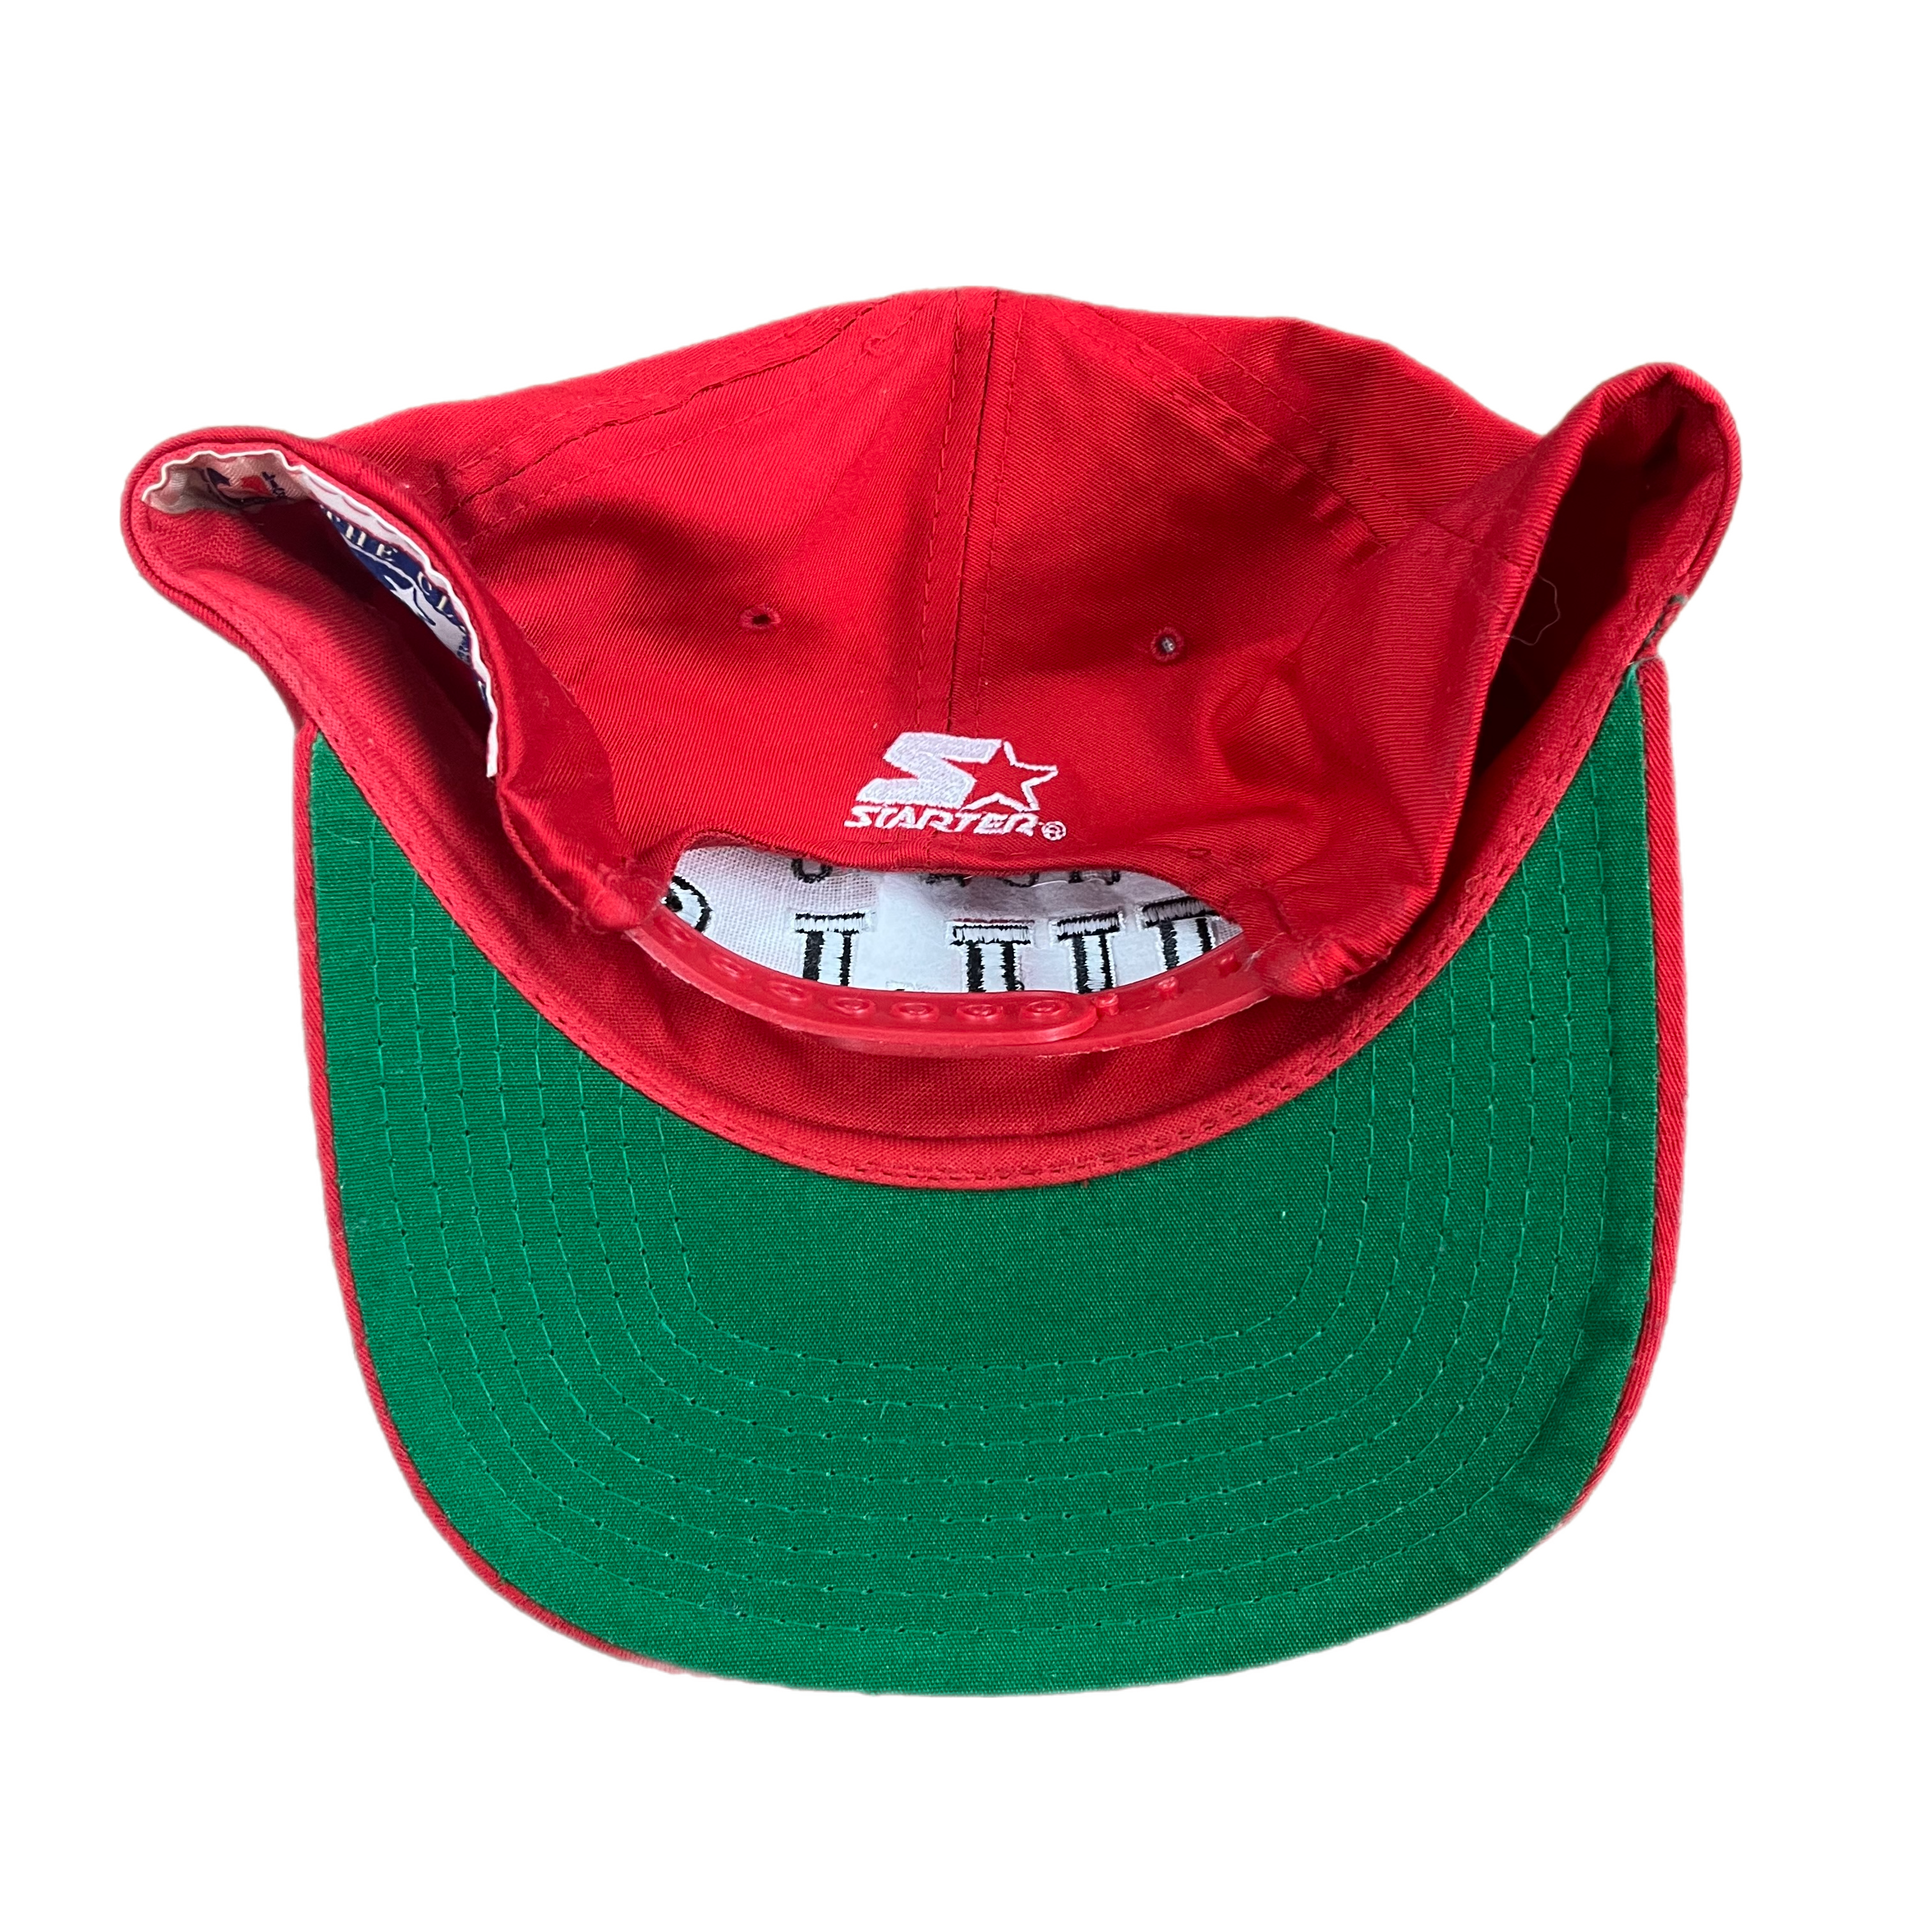 CHICAGO BULLS CLASSIC LOGO SNAPBACK HAT (RED)